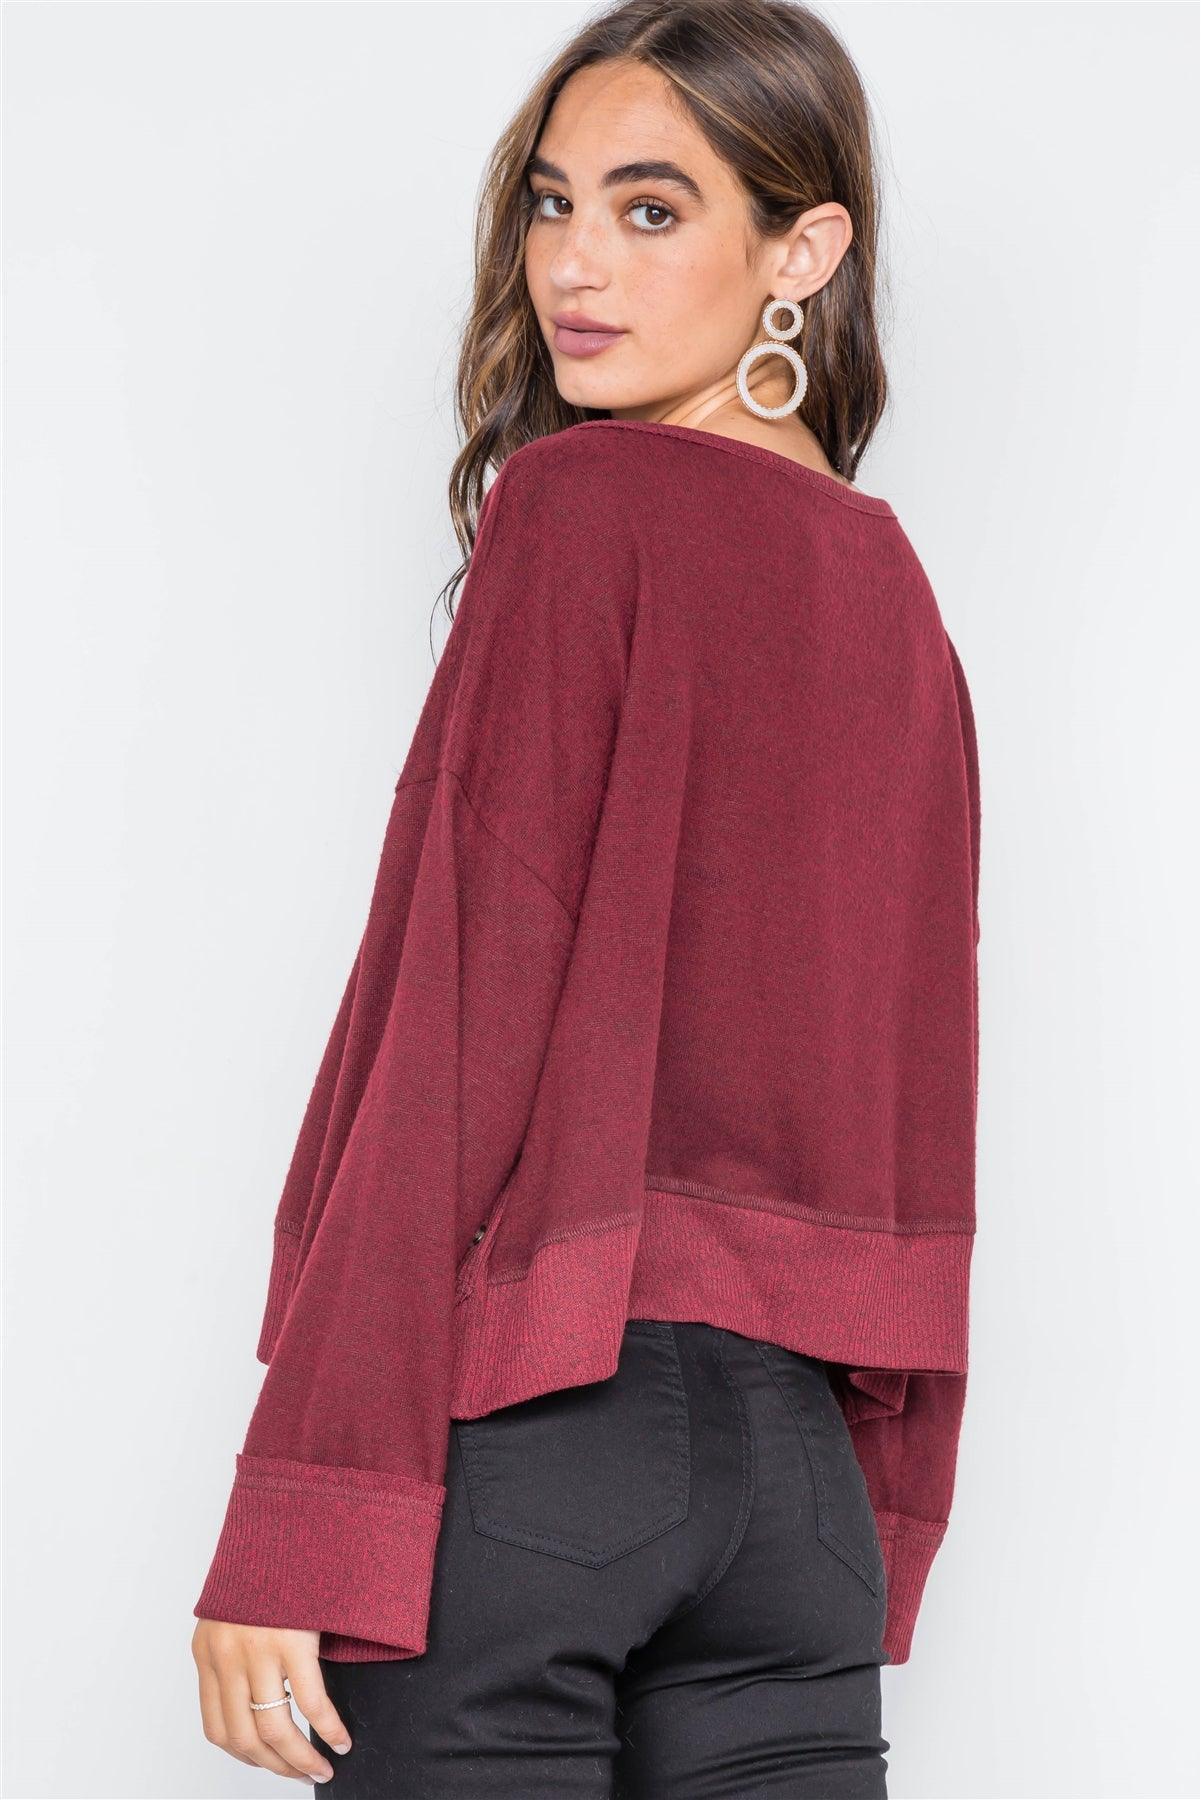 Burgundy Soft Knit Side-Button Sweater